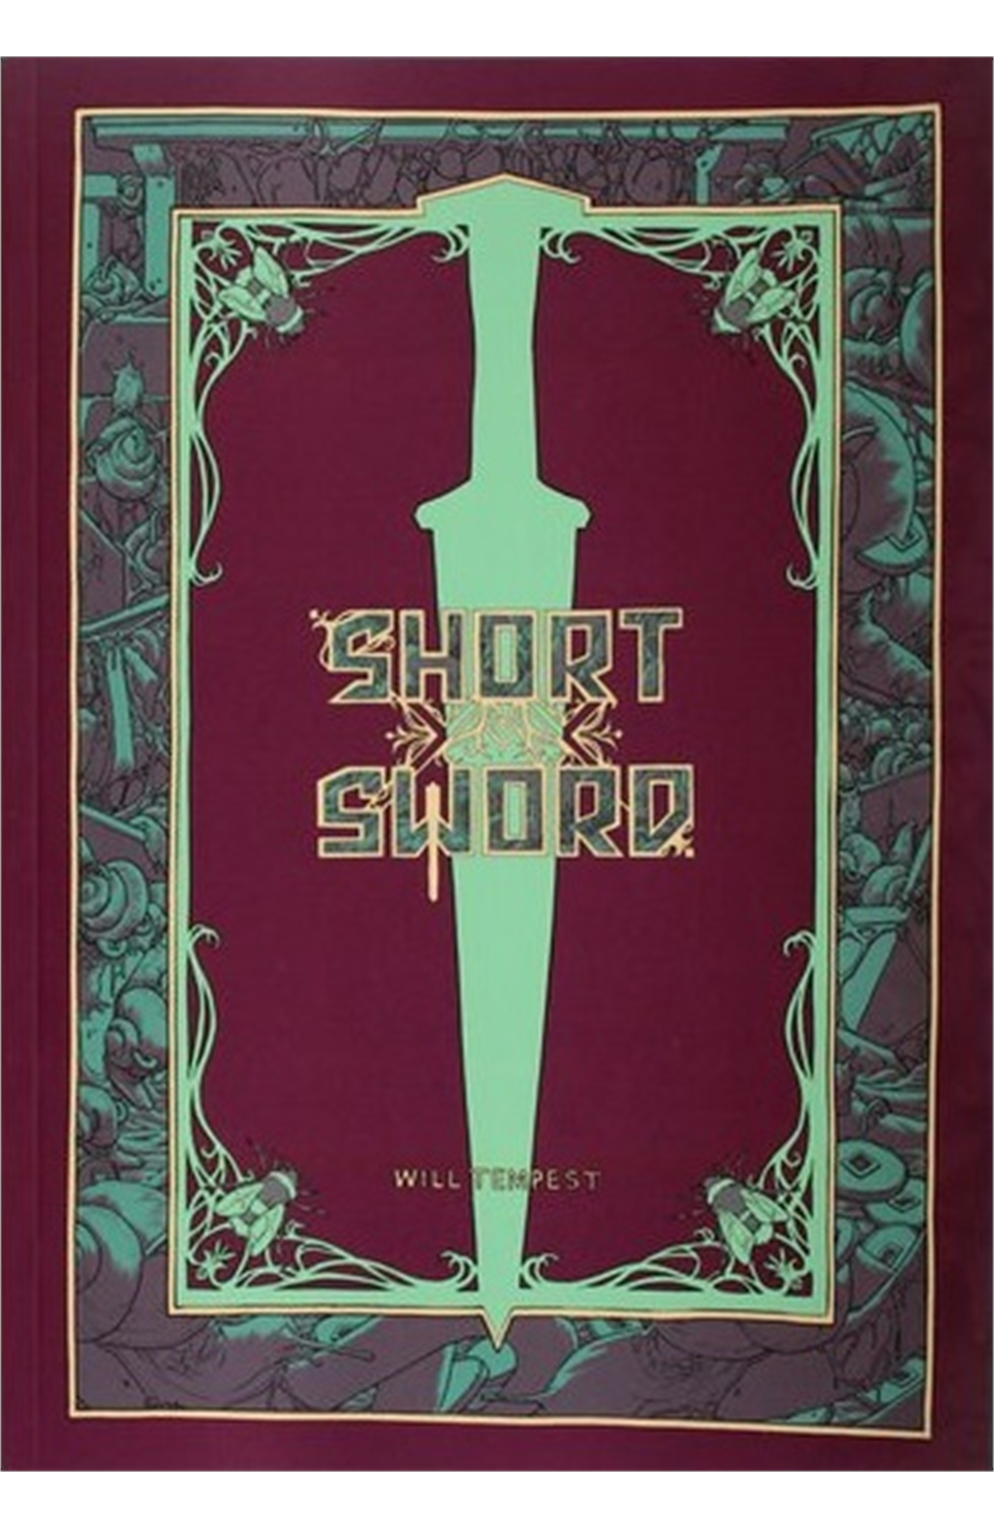 Short Sword Graphic Novel